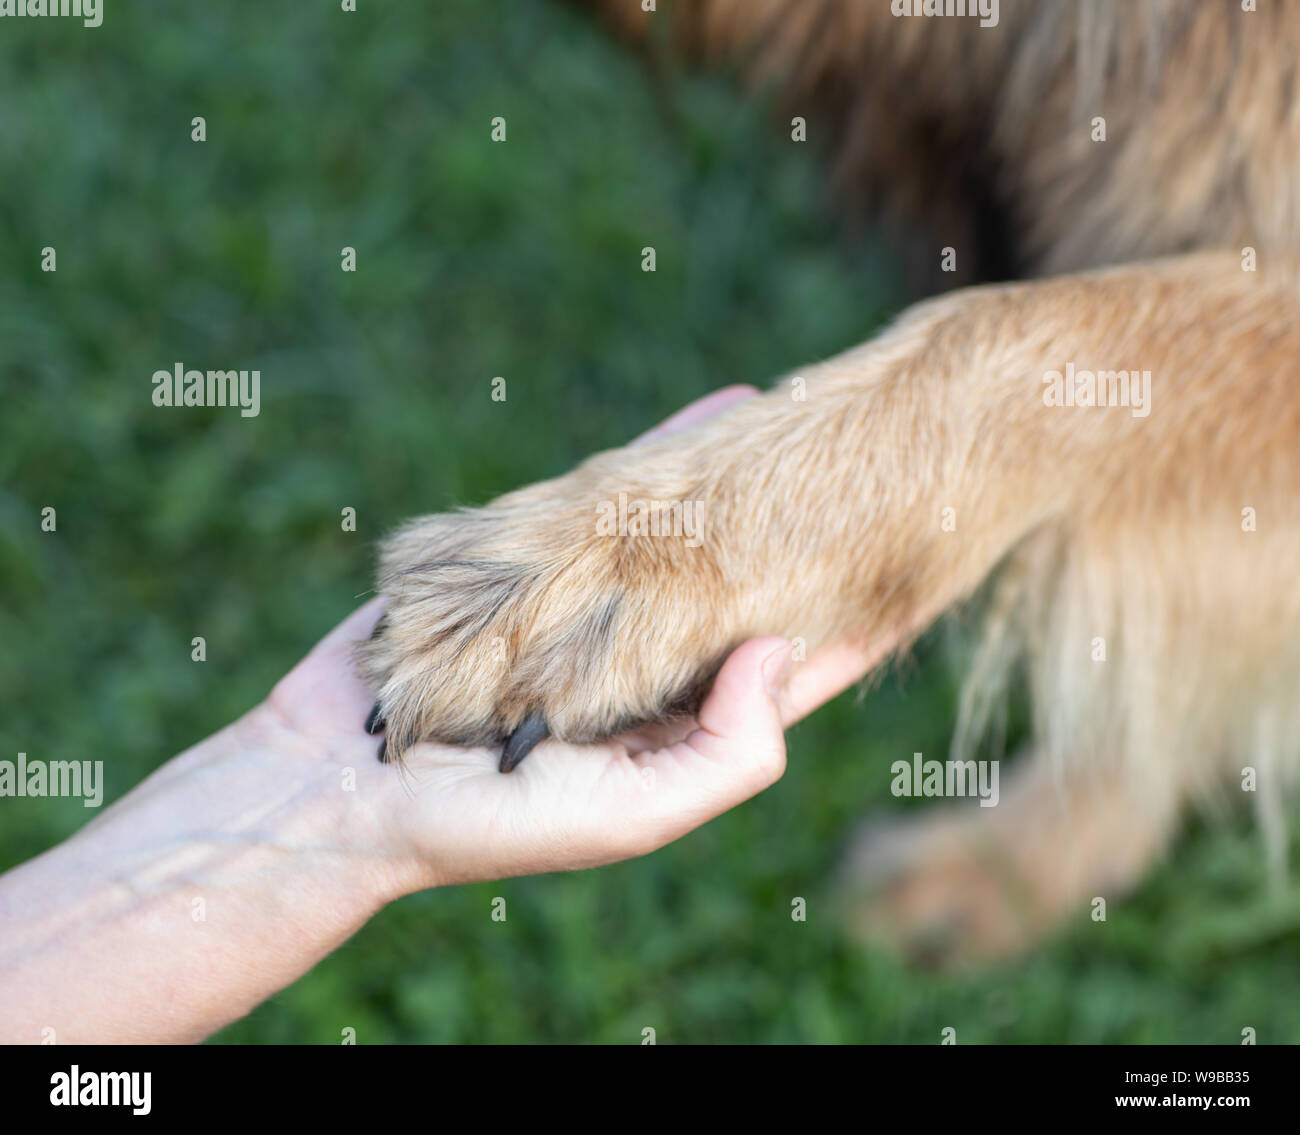 Handshake between human and dog outdoor Stock Photo